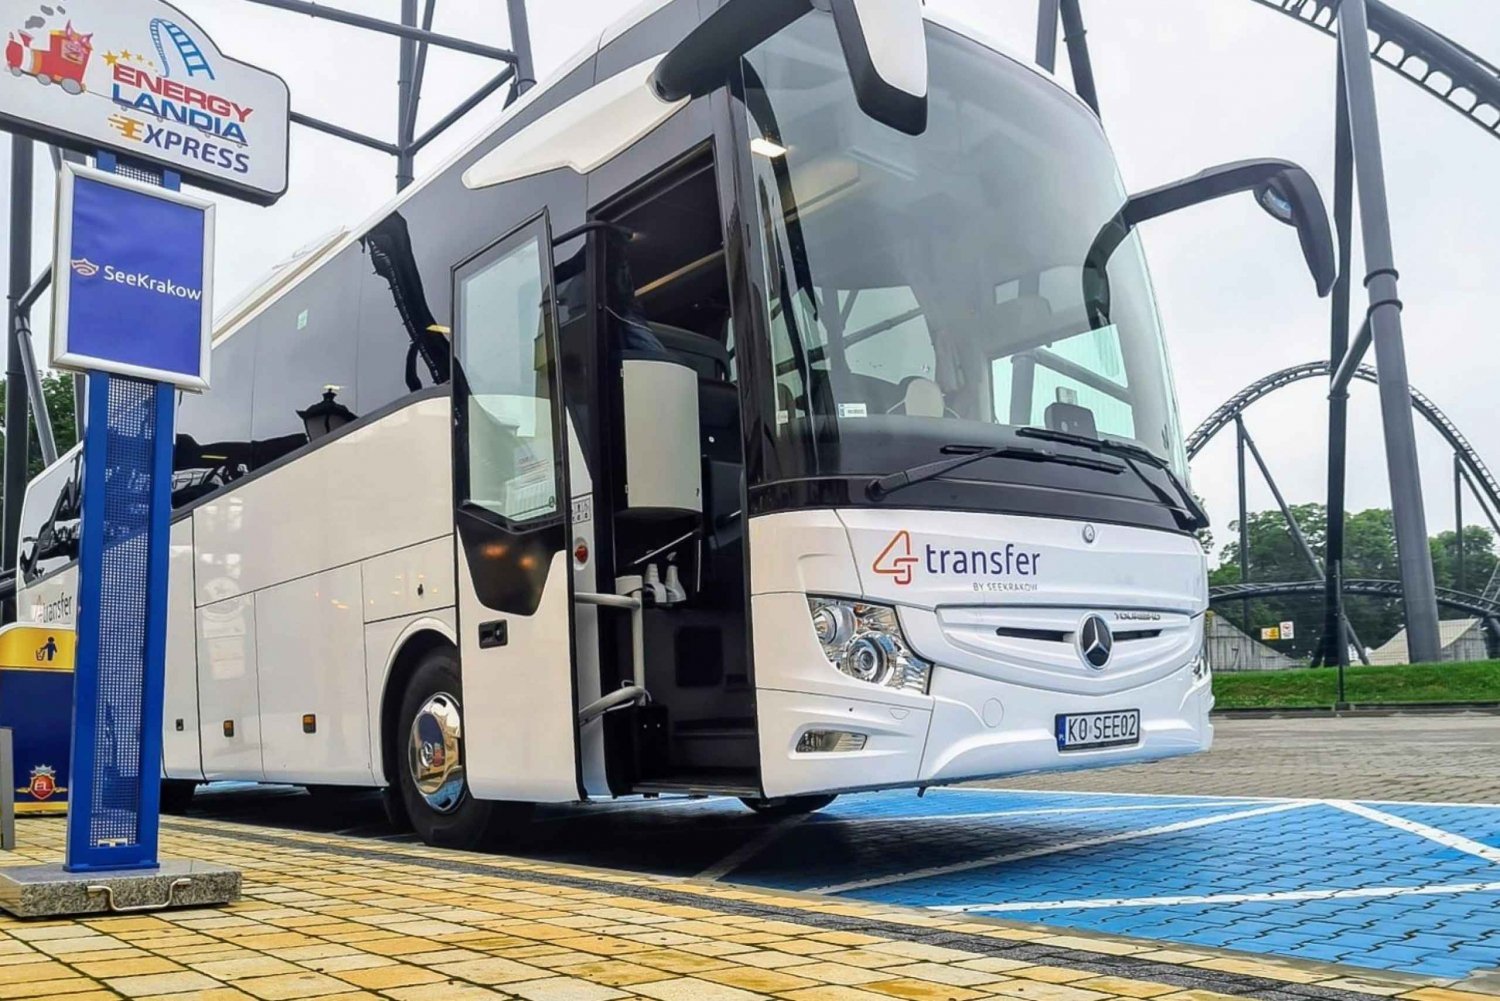 From Krakow: Roundtrip Bus Transfer to Energylandia